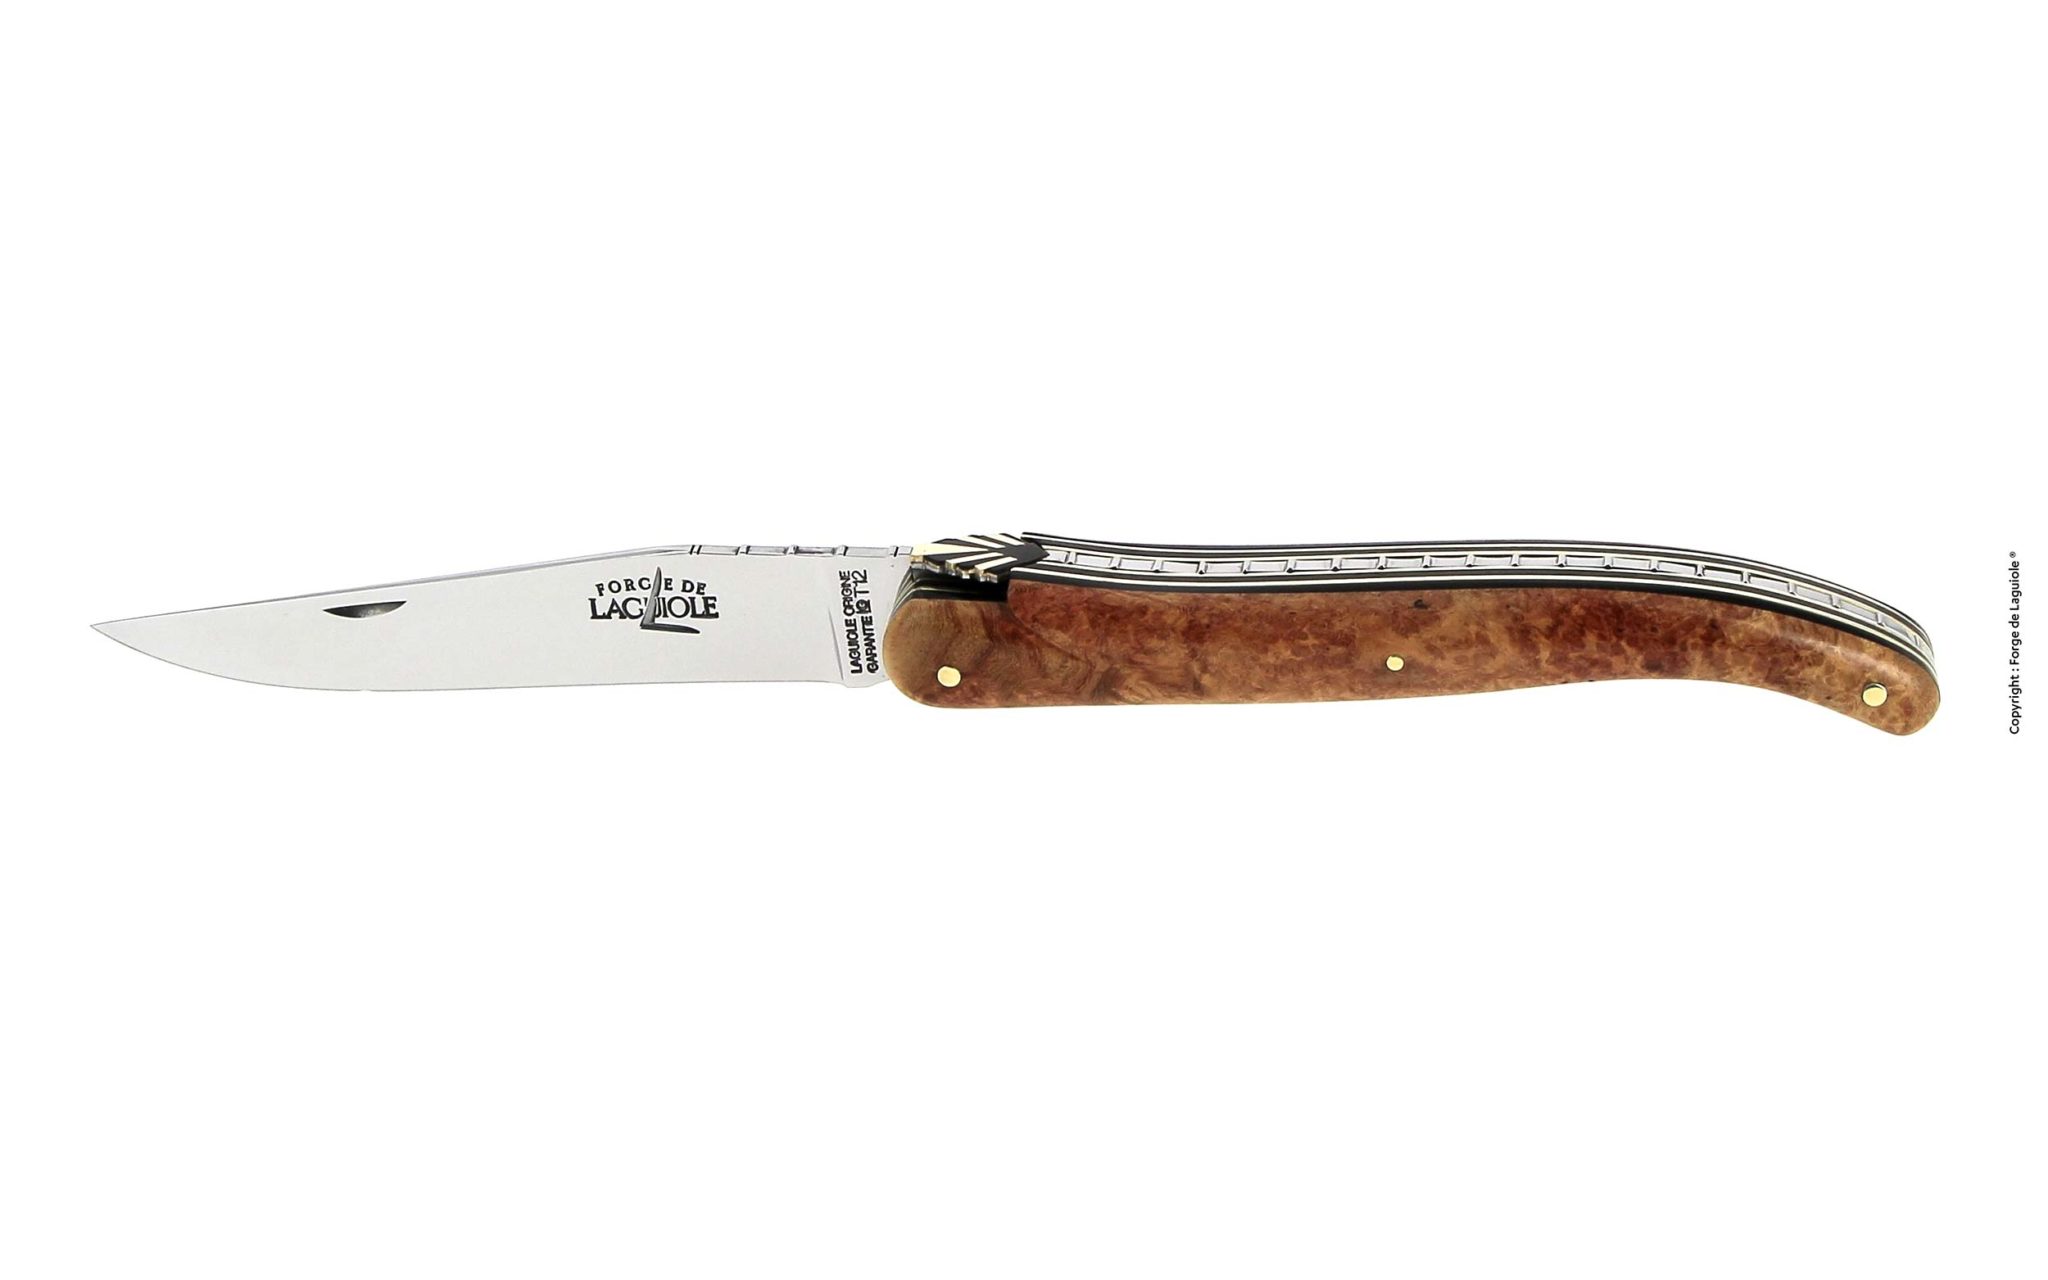 RAMBAUD-222-laguiole-custom-handmade-full-handle-ambonya-folding-knife-12-cm.jpg